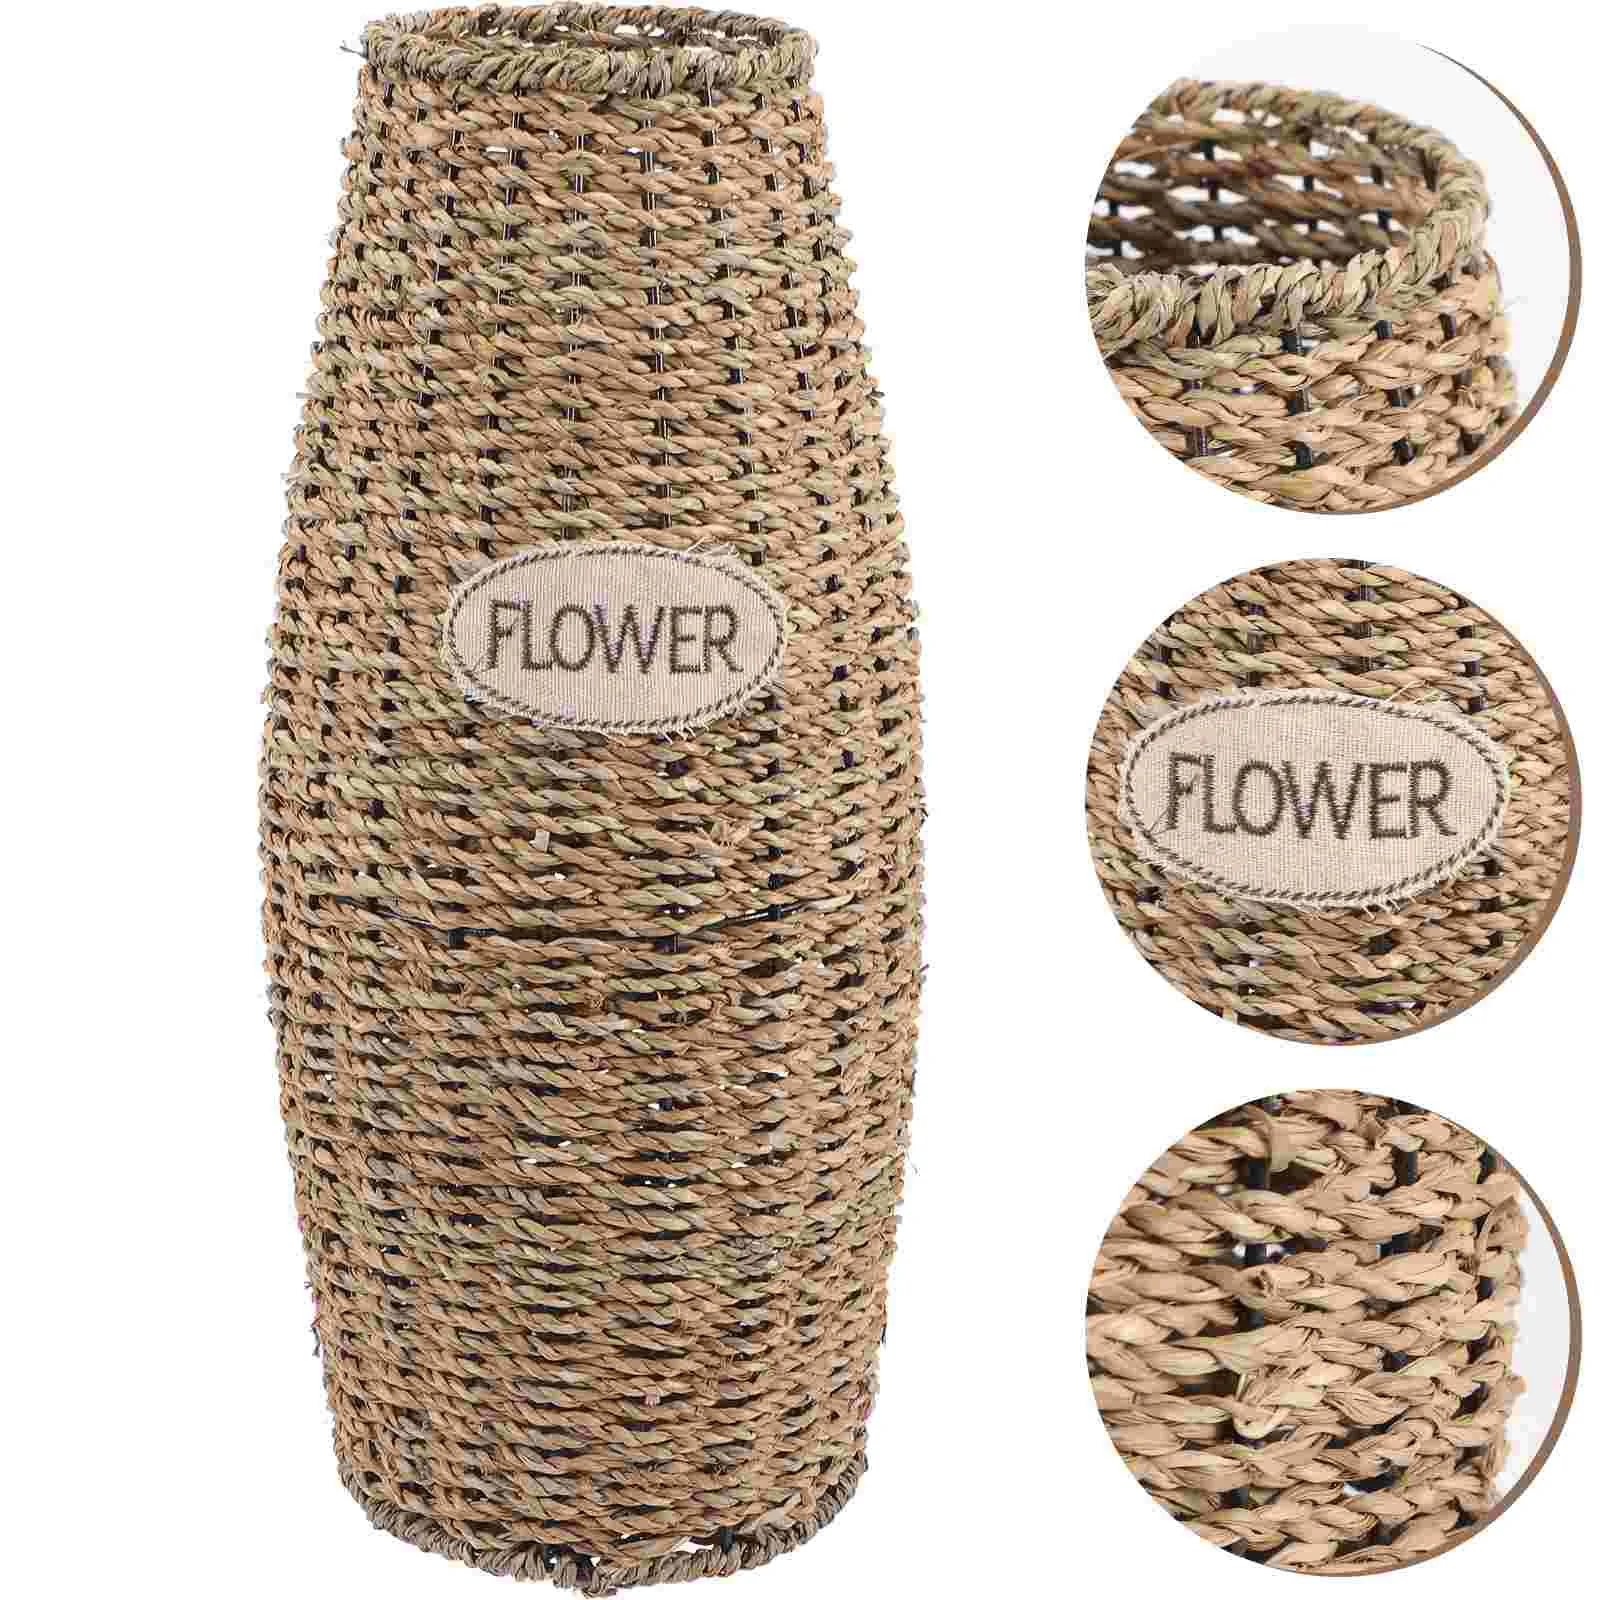 

Dry Vase Vases Centerpieces Small Table Decorations Flower Bottle Tabletop Bouquets Vintage Rattan Weaving Planter